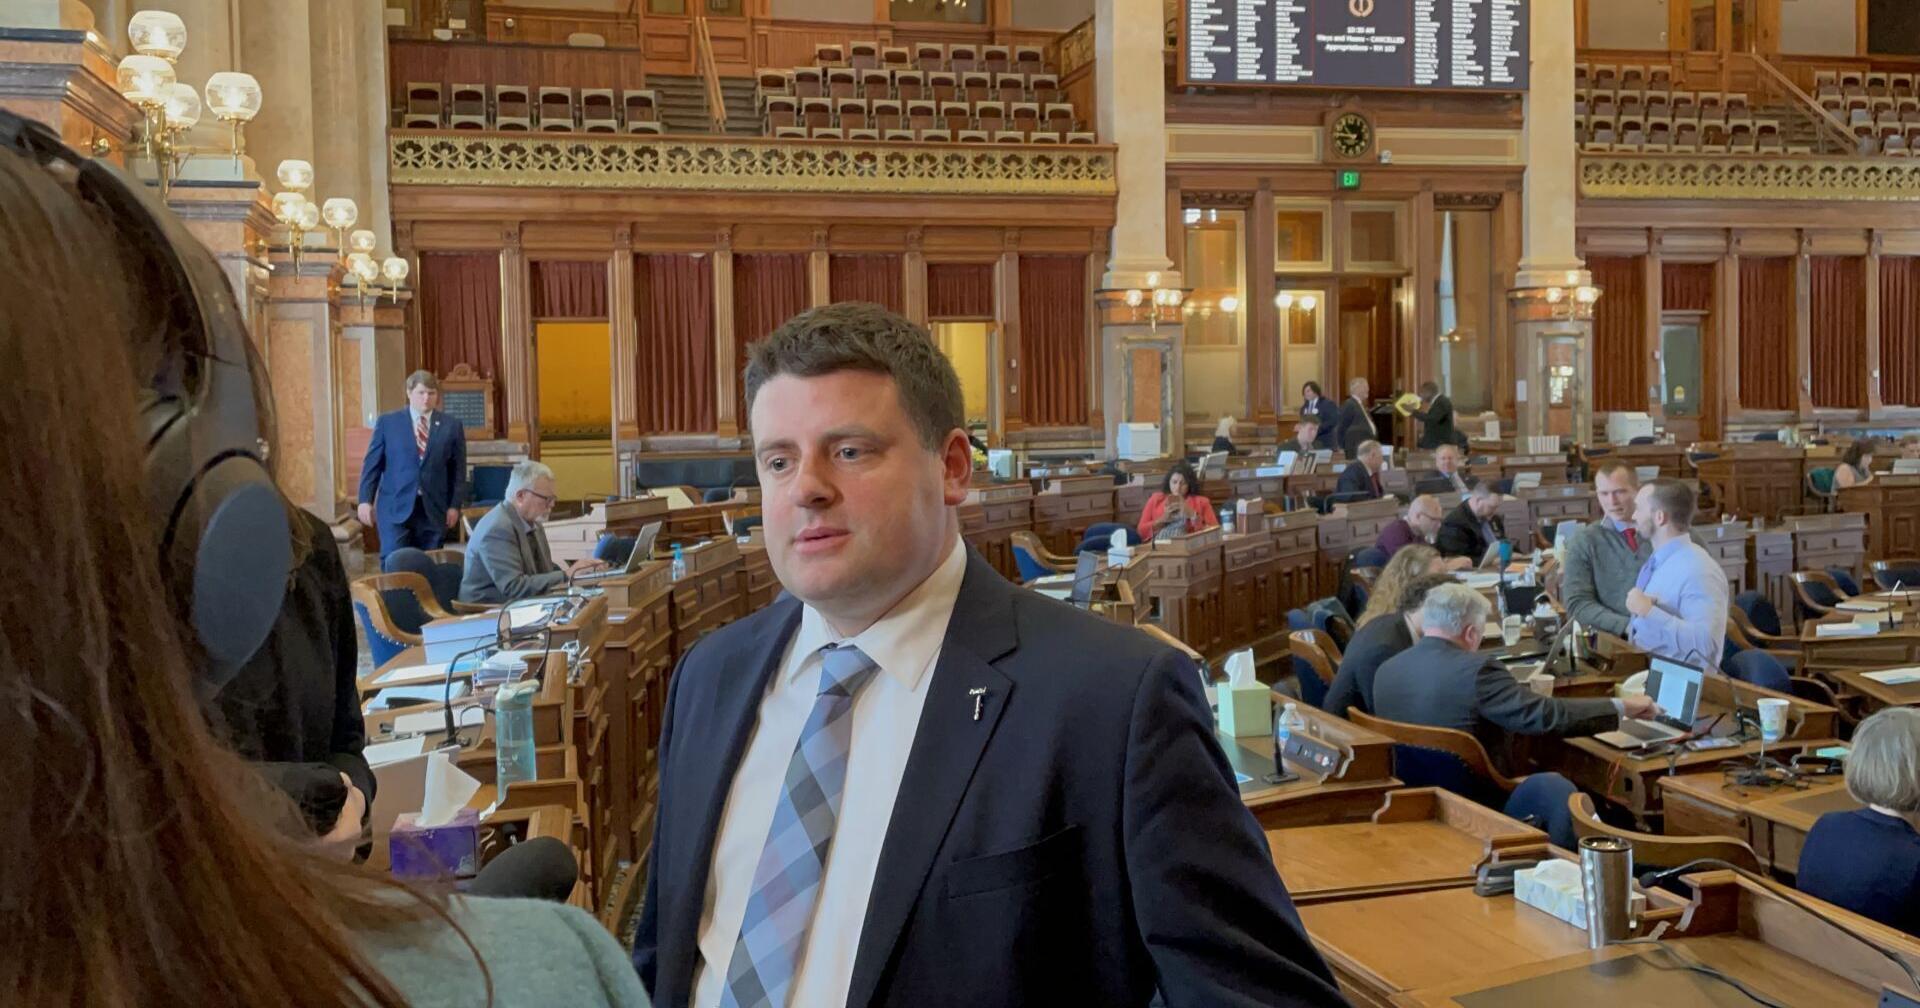 Iowa legislators to move on public school funding